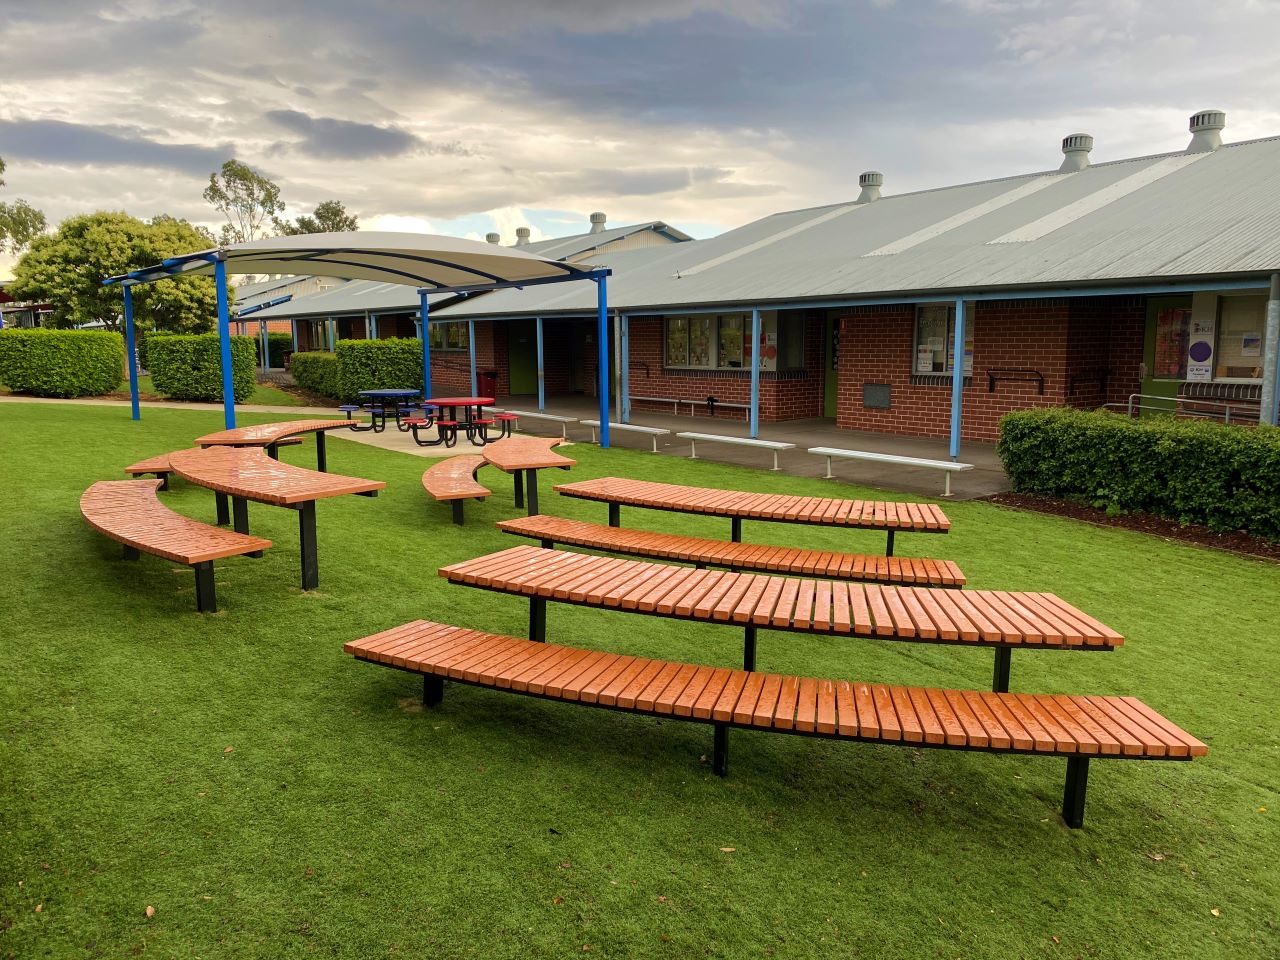 School Outdoor furniture installed as an outdoor classroom